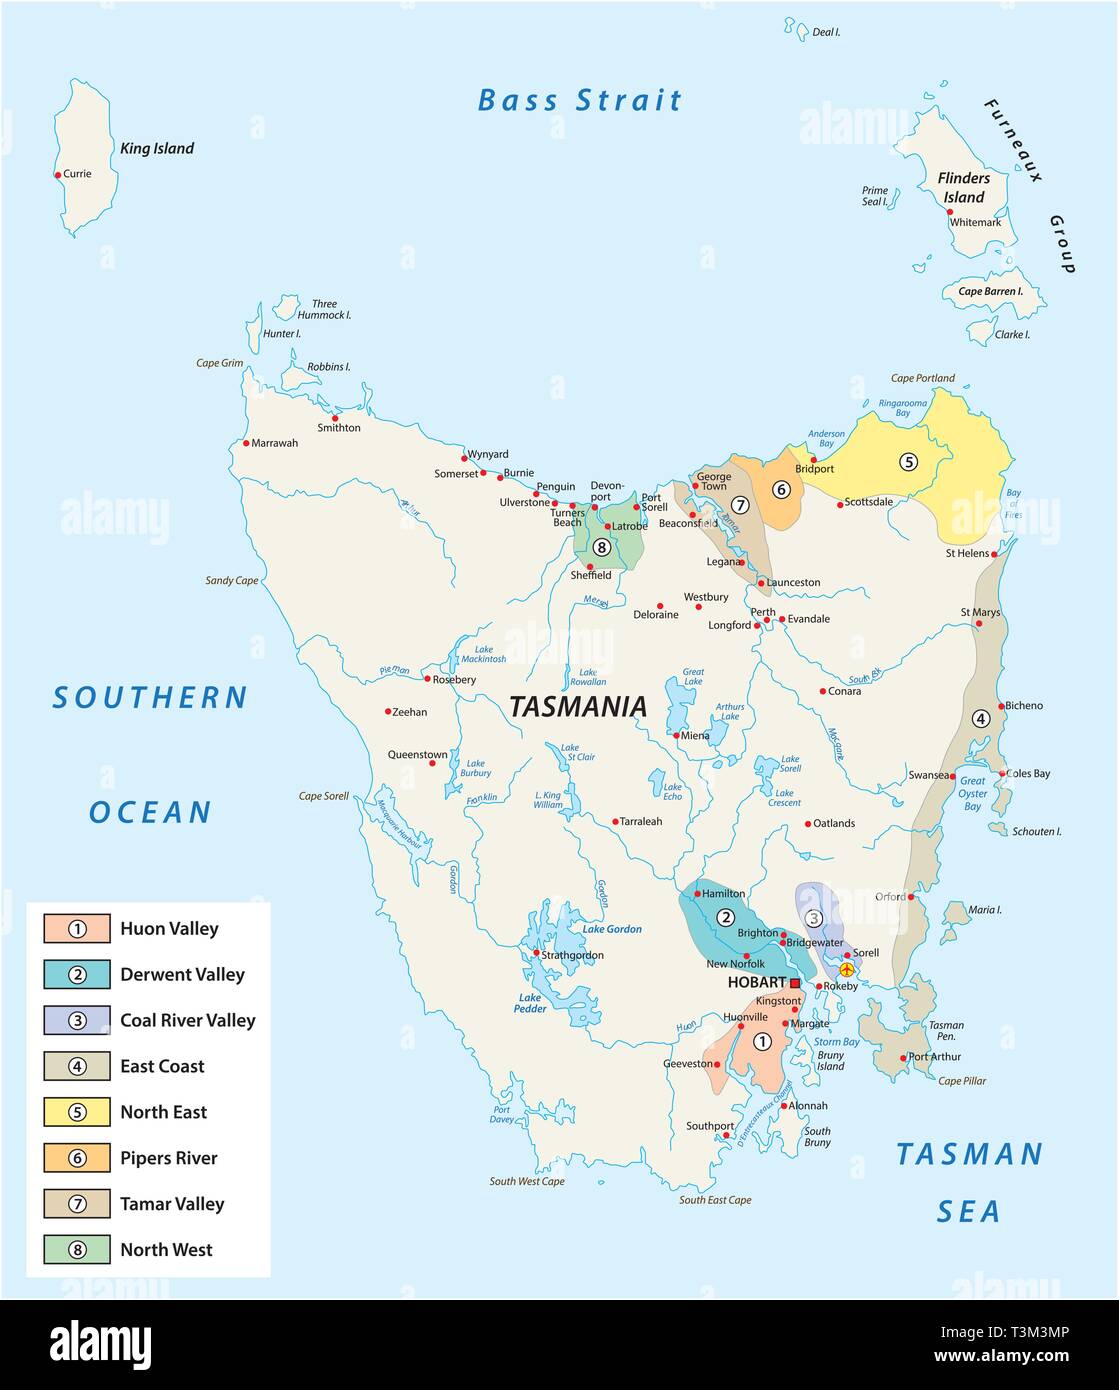 tasmania wine regions and vineyards vector map Stock Vector